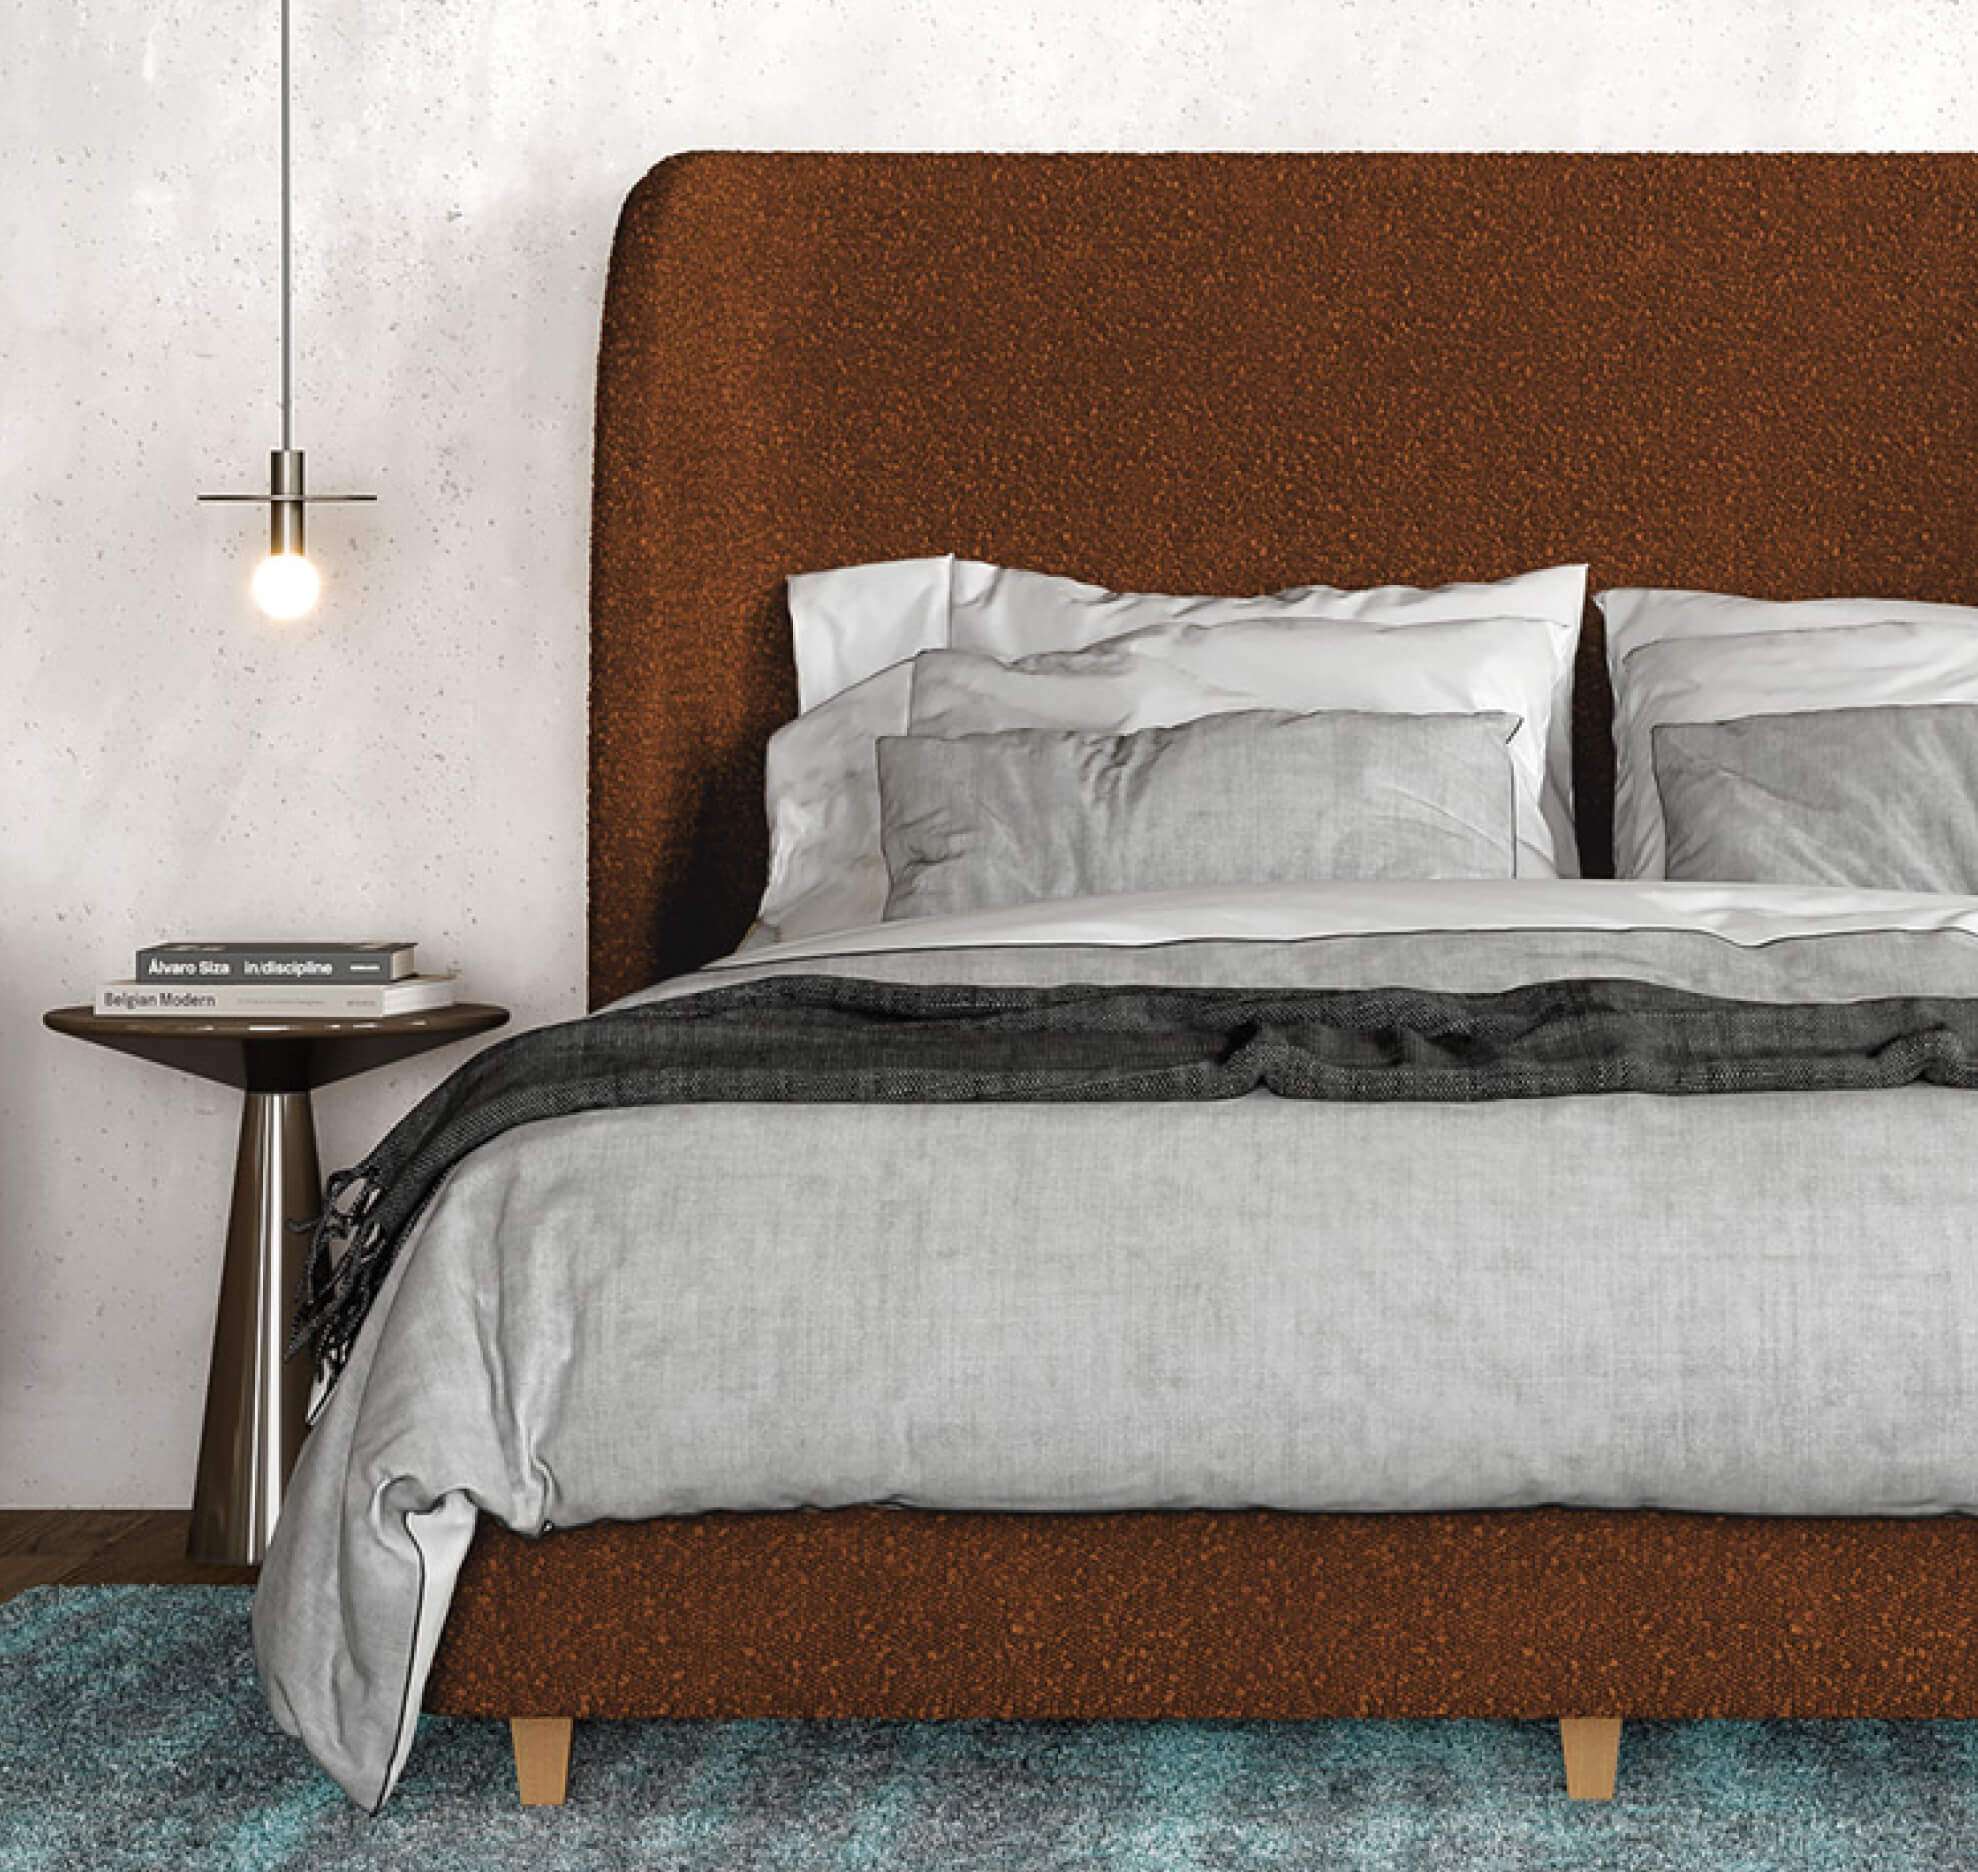 Example bedroom suite with earthy tones